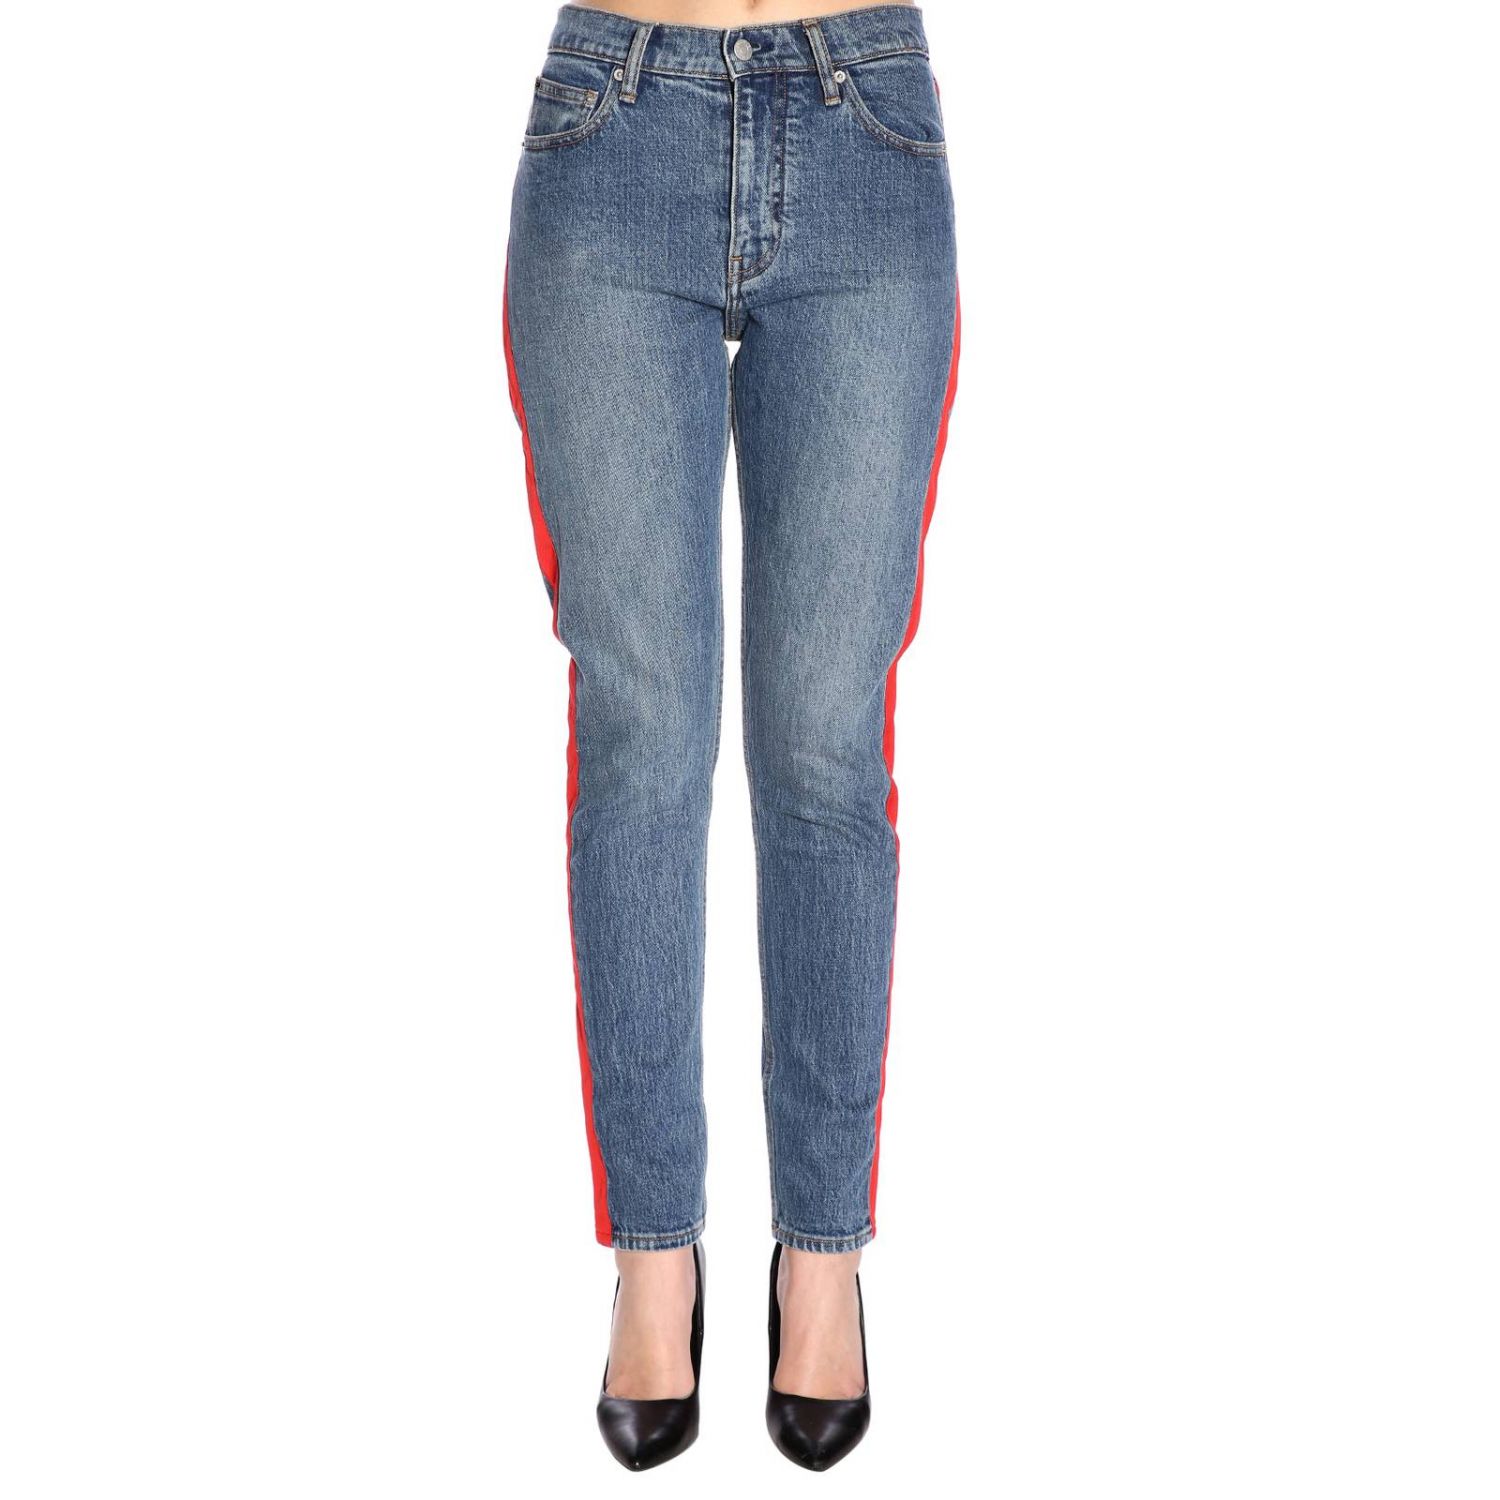 calvin klein jeans women